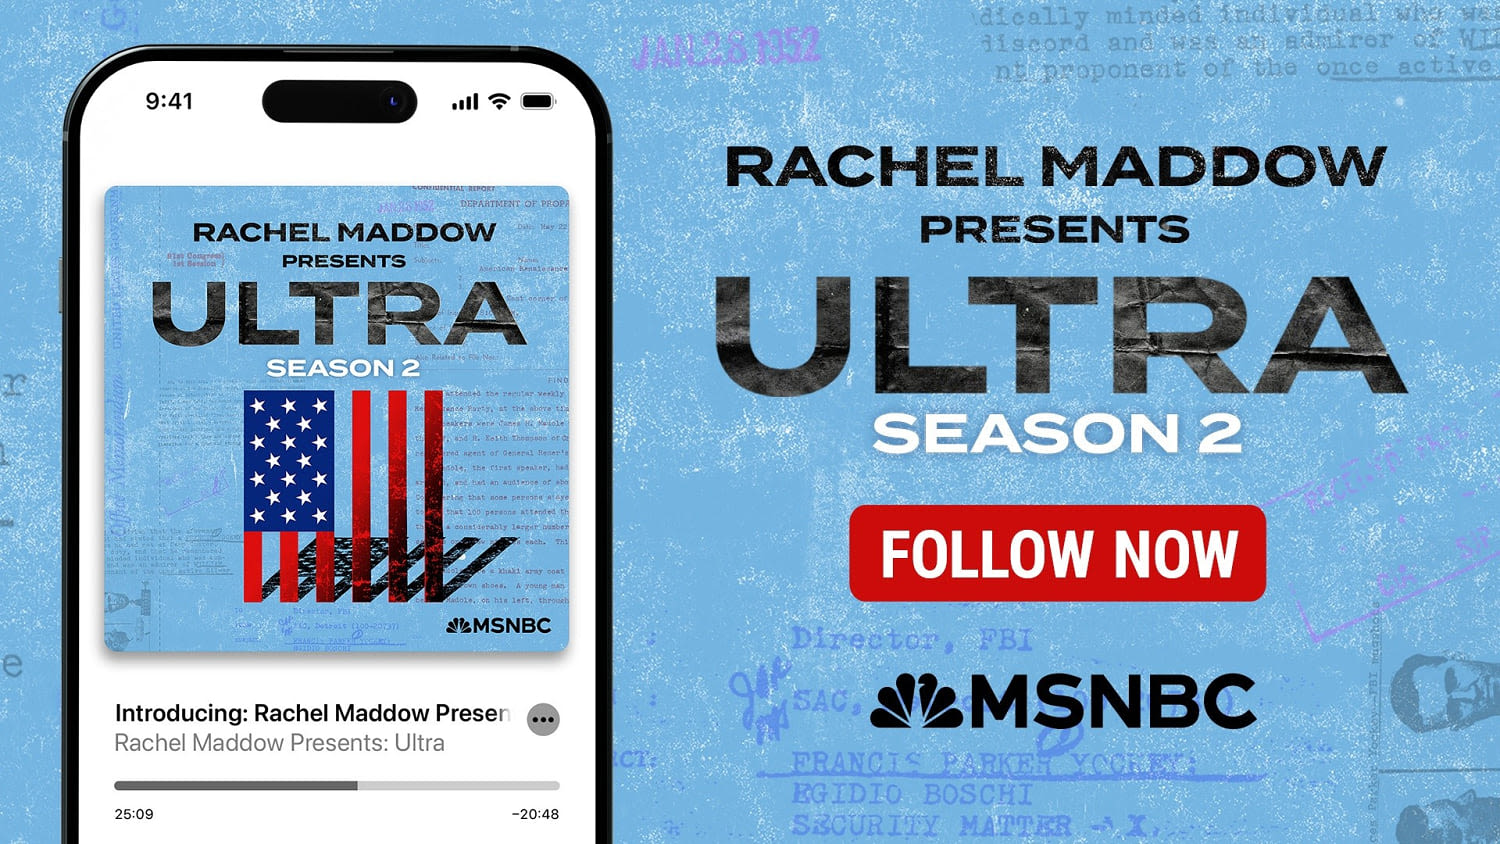 Maddow Blog | Coming June 10: Rachel Maddow Presents Ultra, Season 2